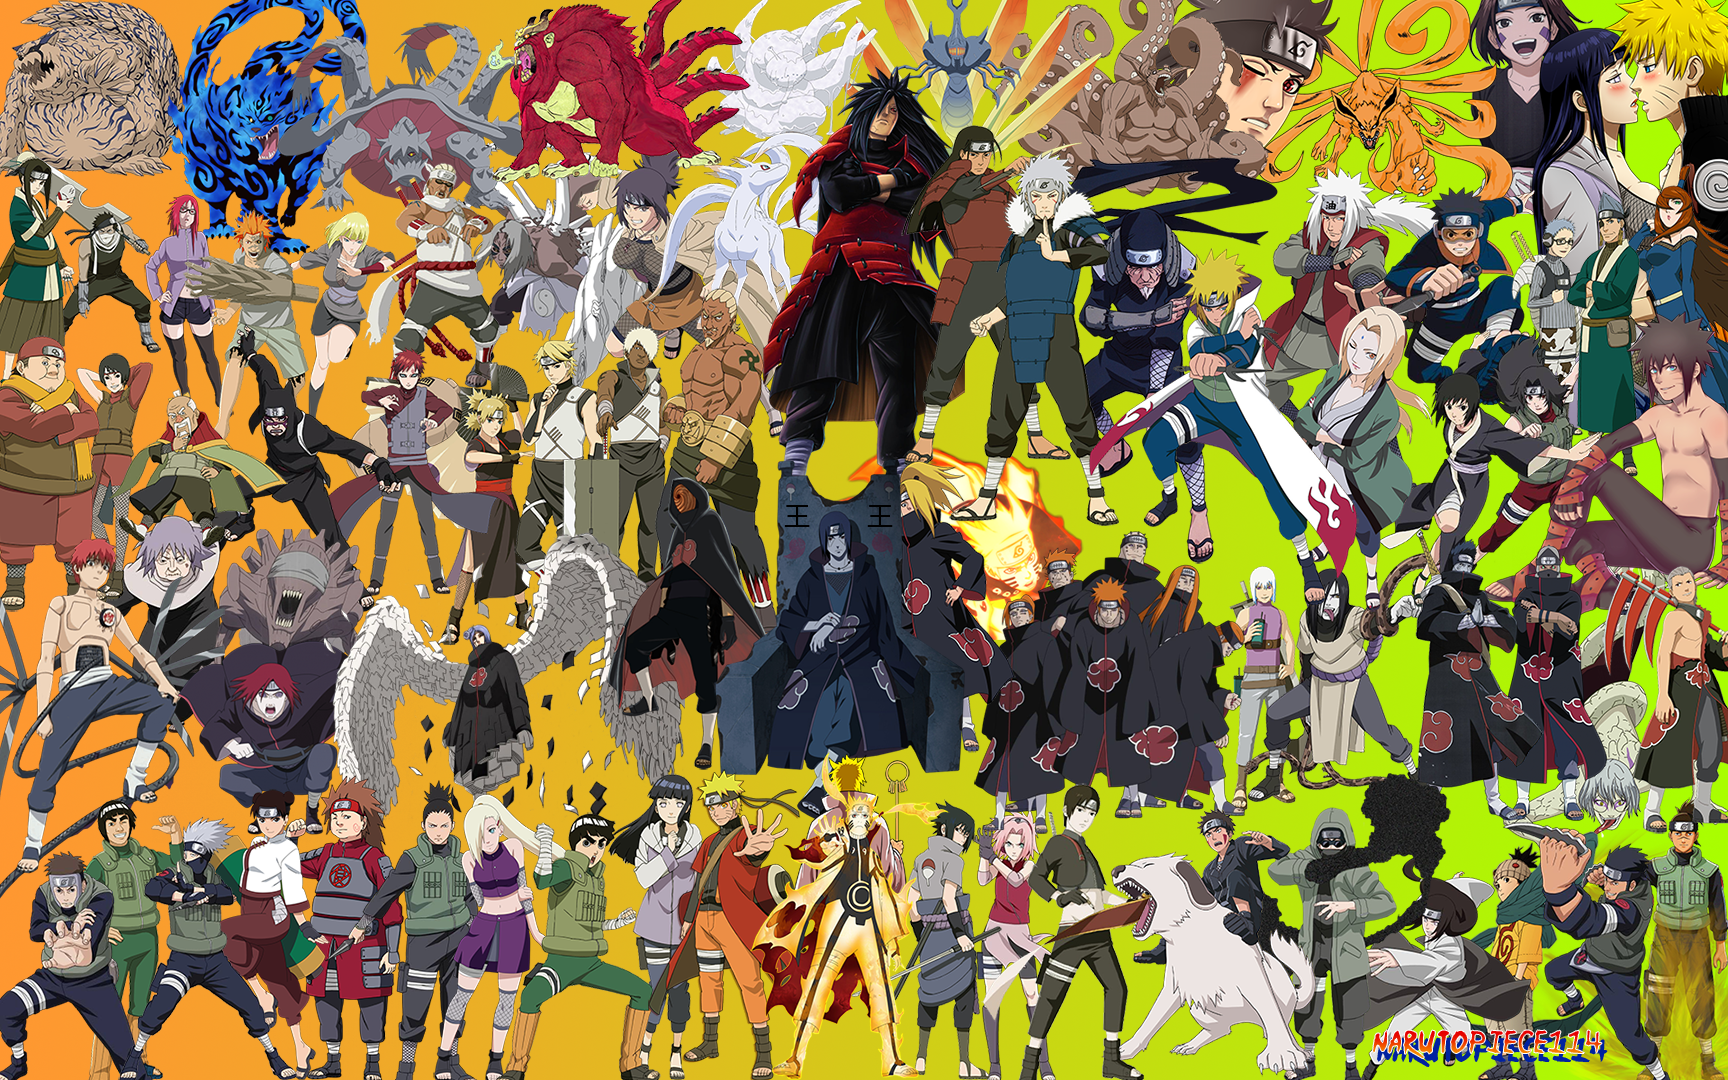 [78+] Naruto Characters Wallpaper on WallpaperSafari